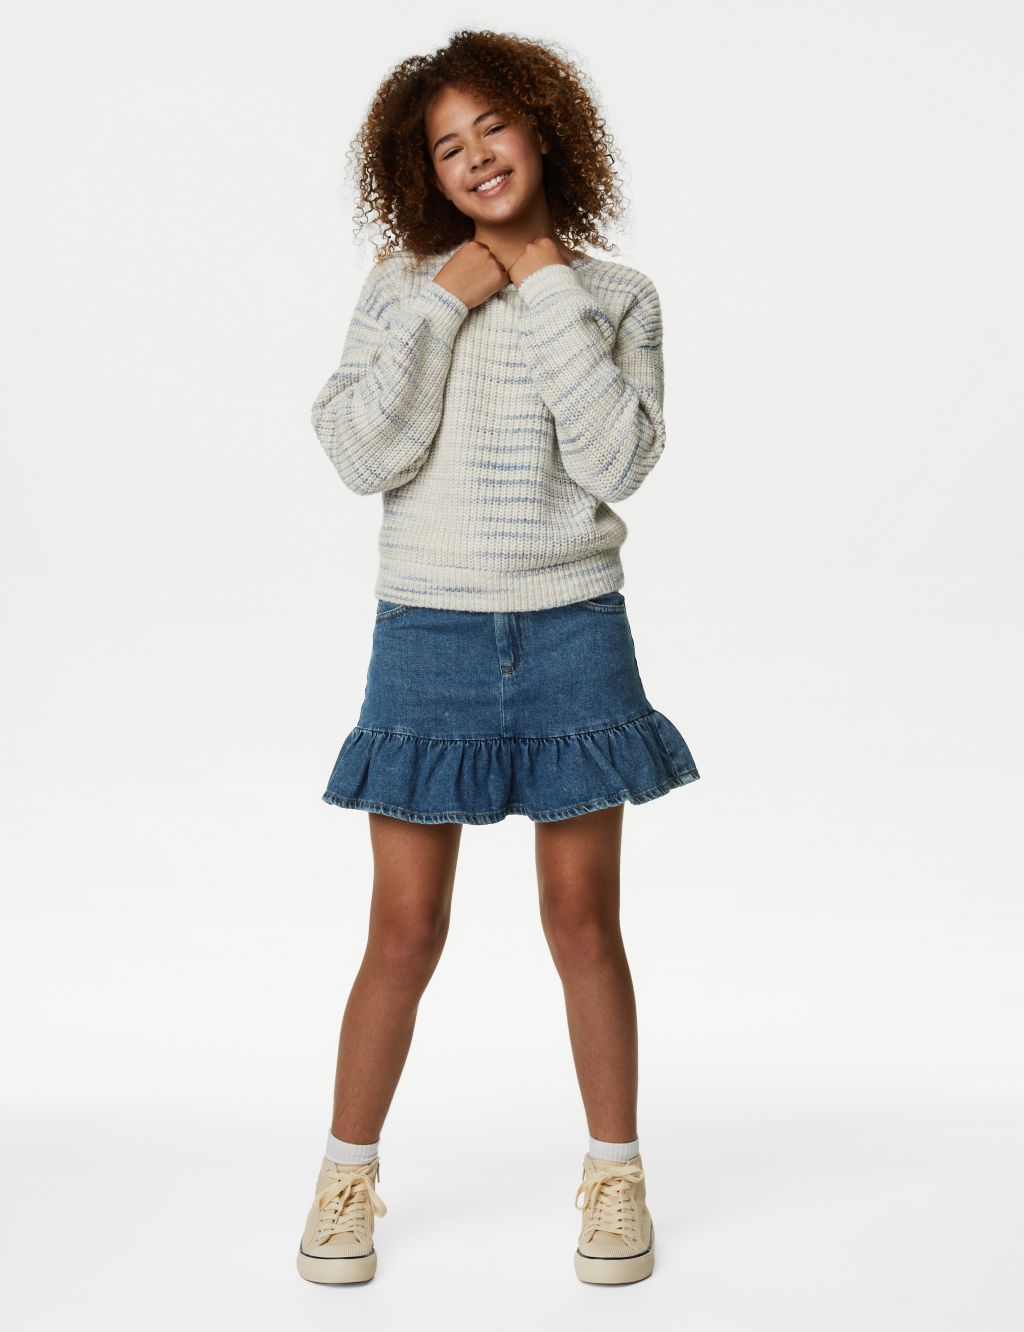 Denim Frill Skirt (6-16 Yrs) image 1